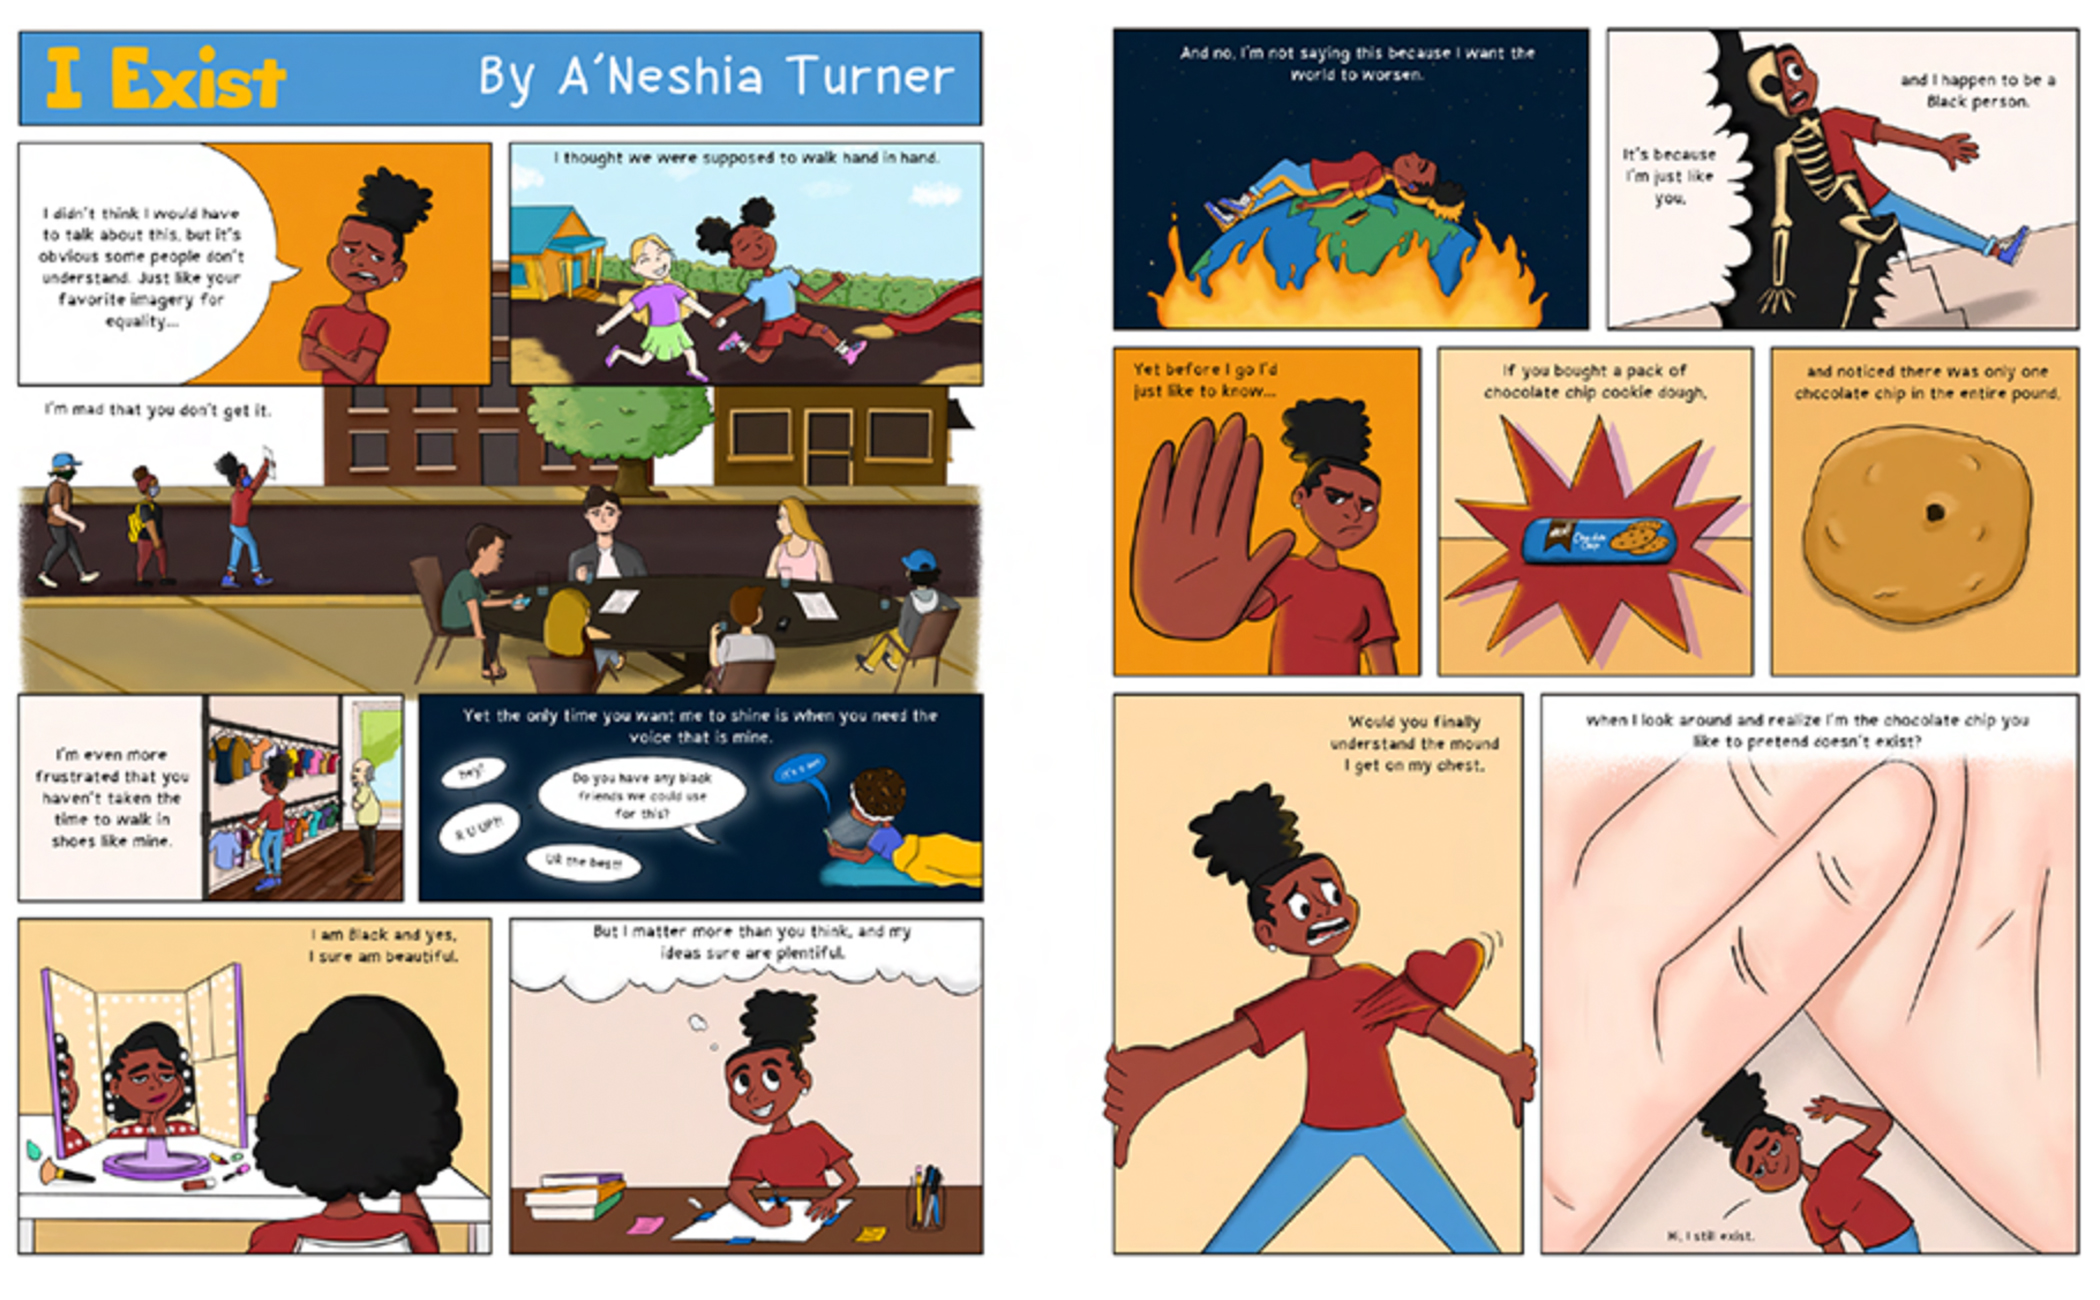 A’Neshia Turner's I Exist award winning comic strip